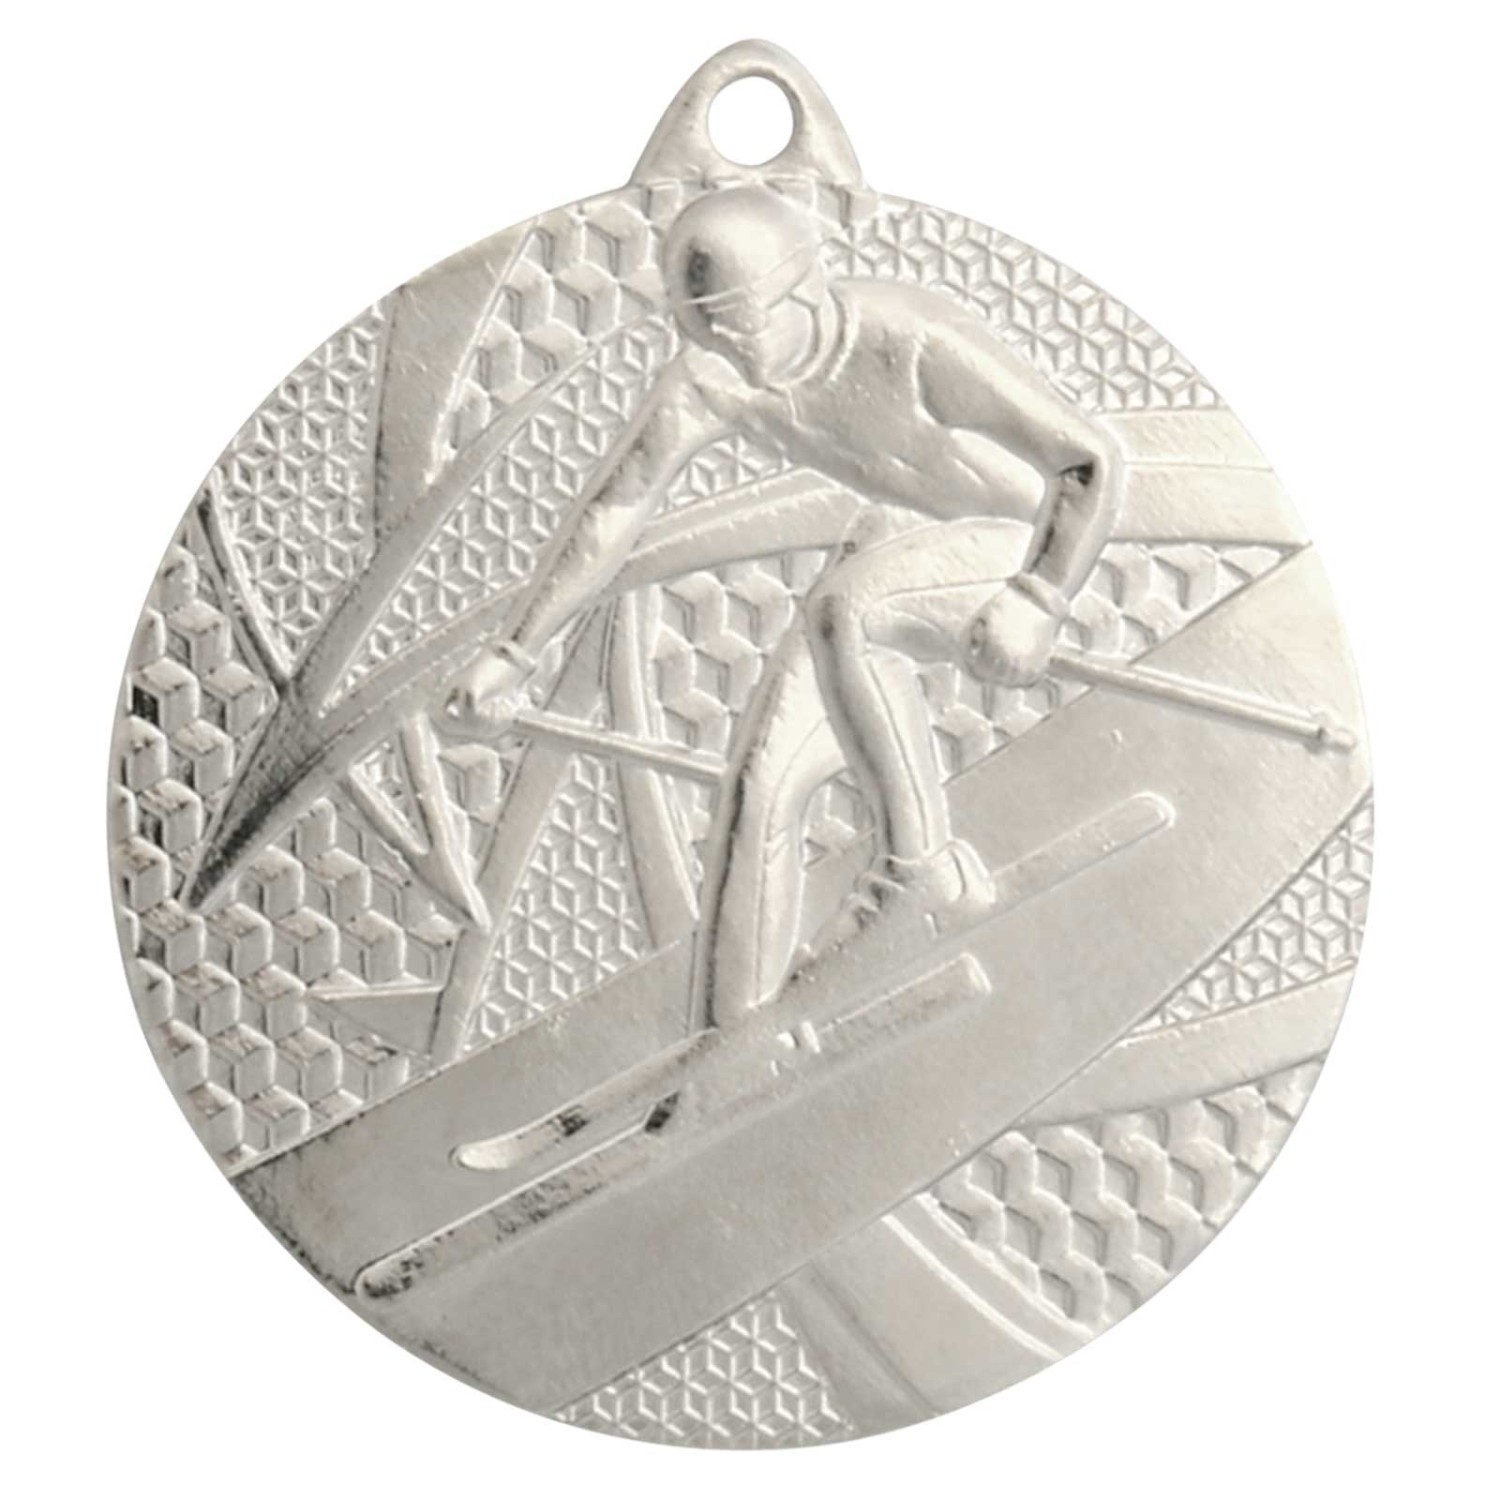 2. Foto Medaille Ski Wintersport Abfahrt gold silber bronze 50 mm Stahl (Sorte: Set je 1x gold / silber / bronze)